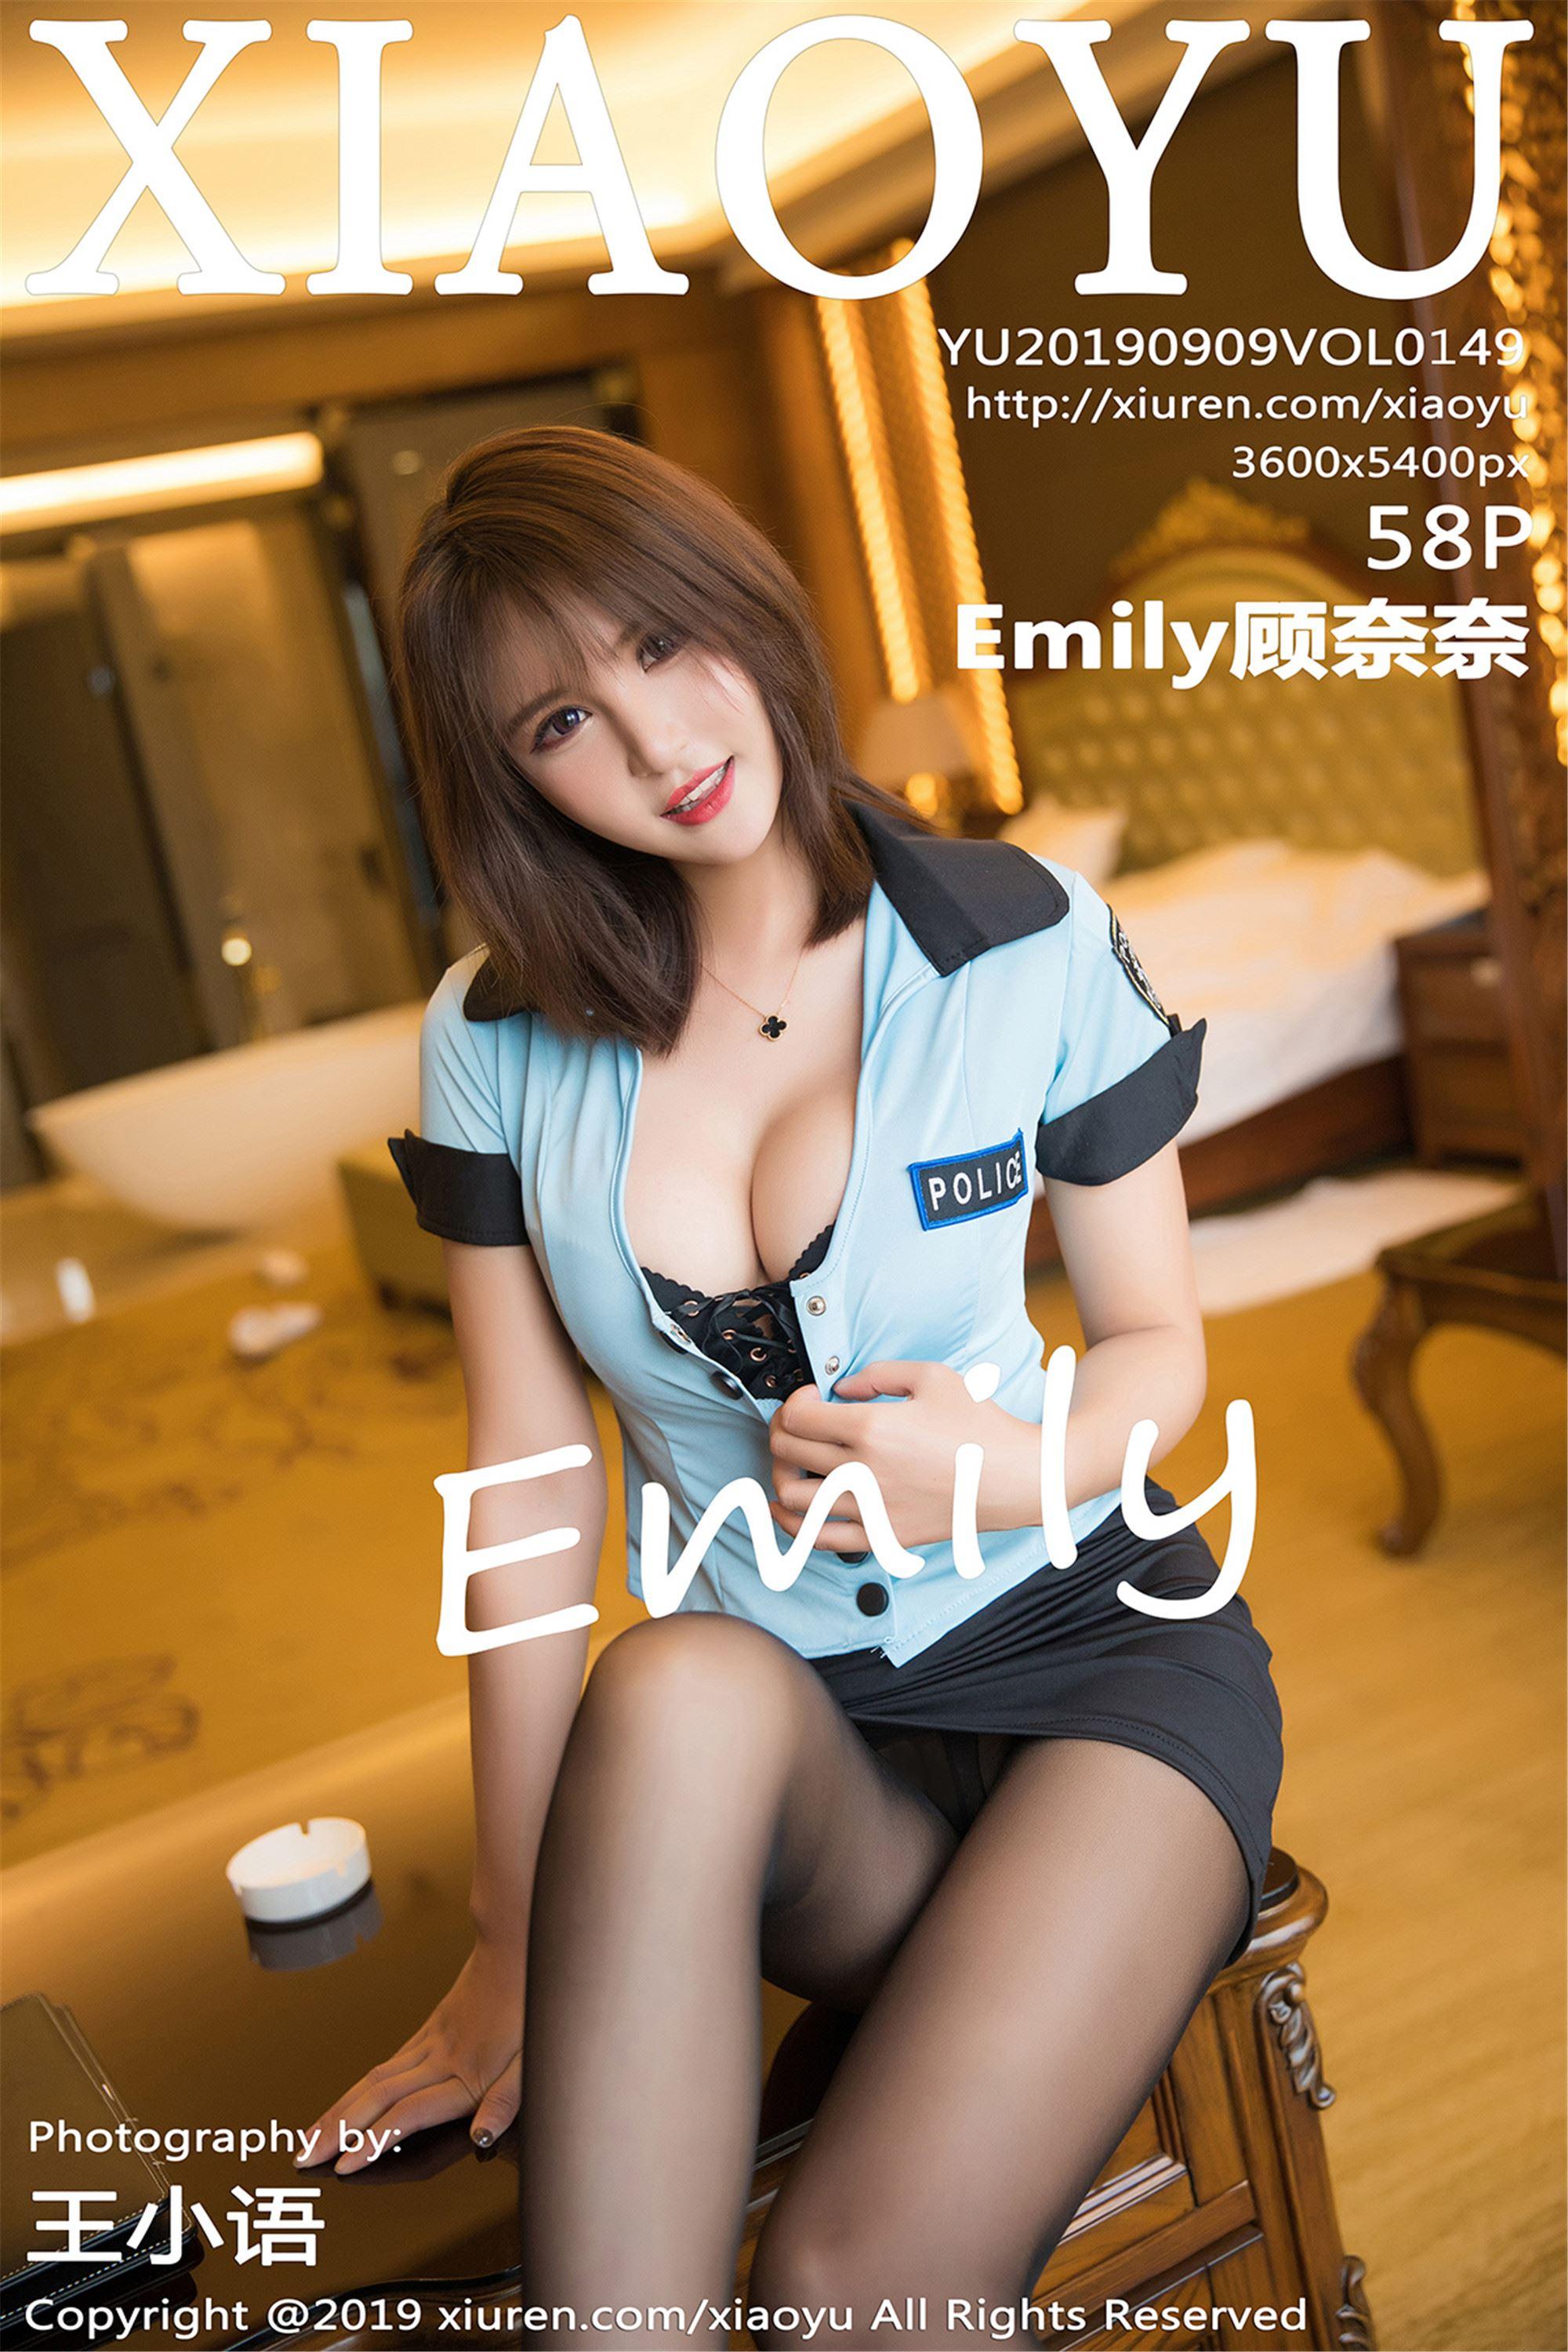 Xiaoyu 语画界  2019.09.09 Vol.149 Emily顾奈奈 - 51.jpg